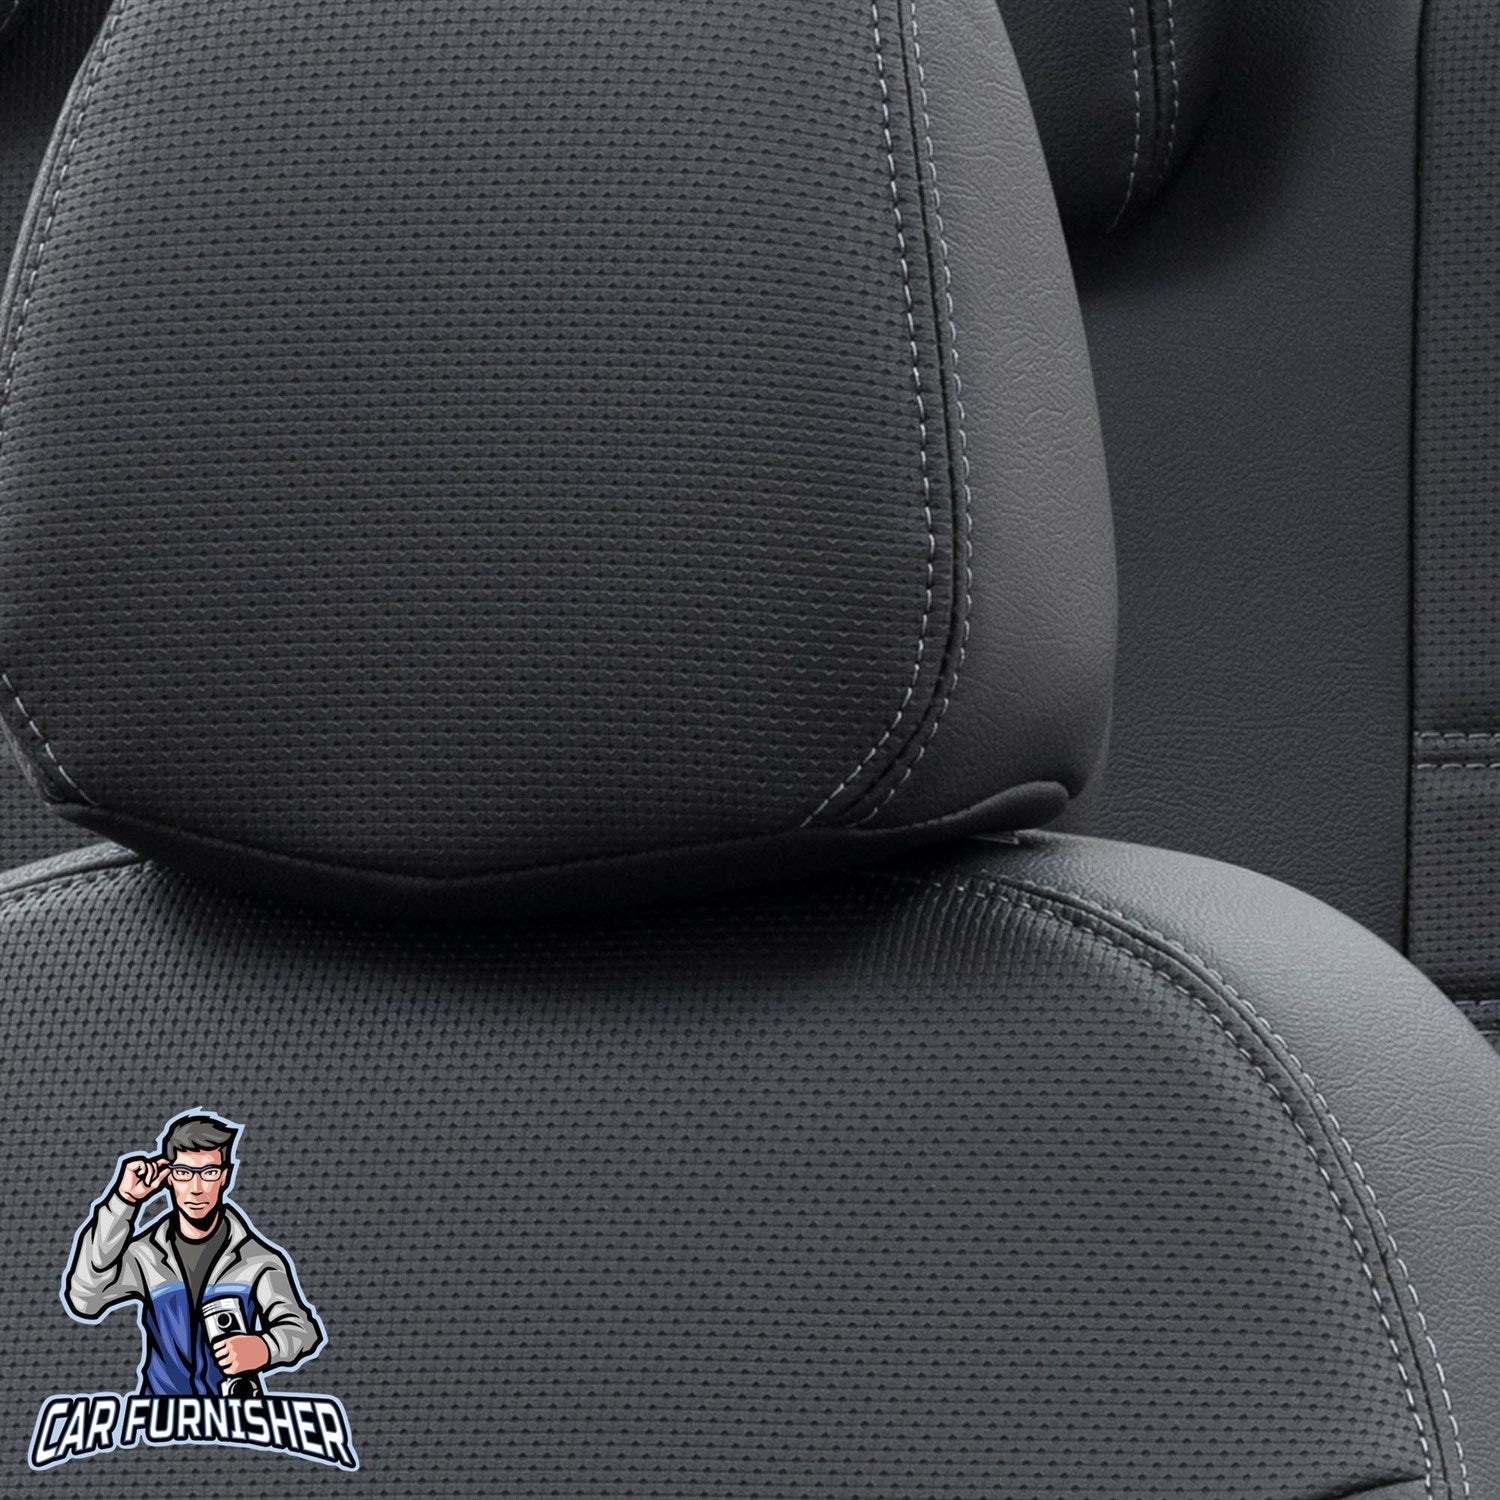 Volvo S60 Car Seat Cover 2000-2018 T4/T5/T6/T8/D5 New York Design Black Full Set (5 Seats + Handrest) Leather & Fabric